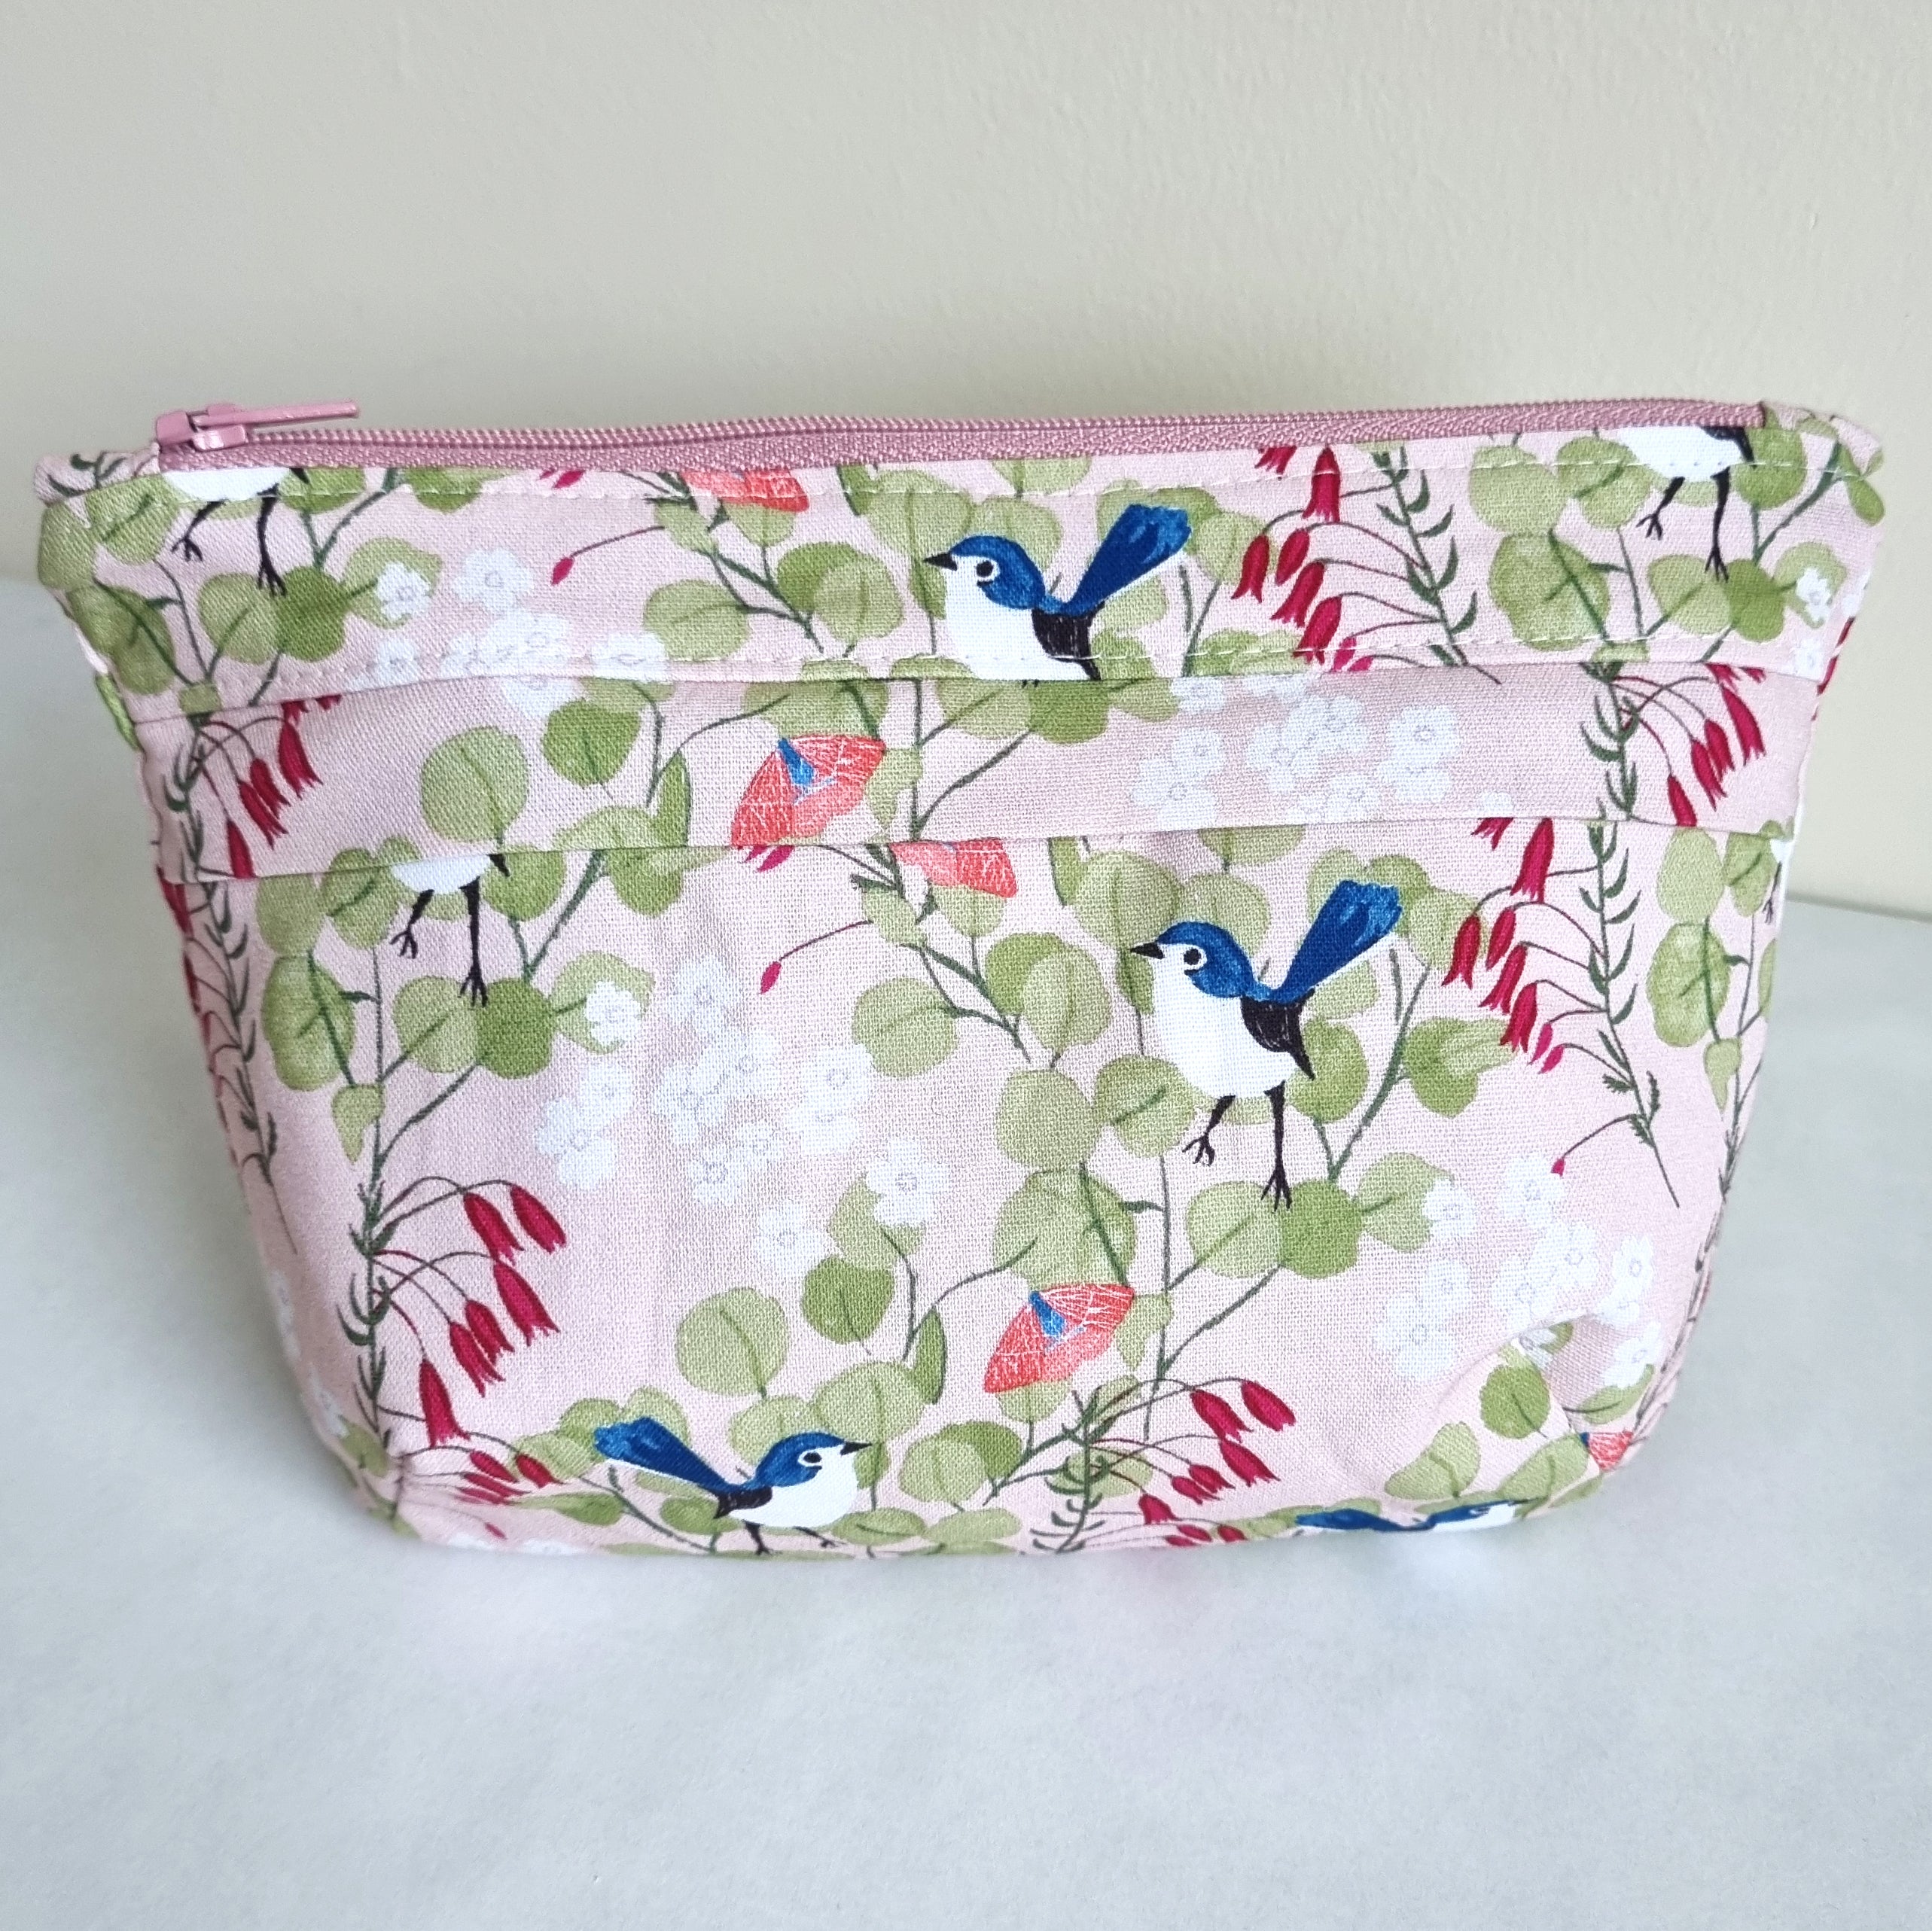 PDF Sewing Pattern to Make Amelia Hobo Bag INSTANT DOWNLOAD 